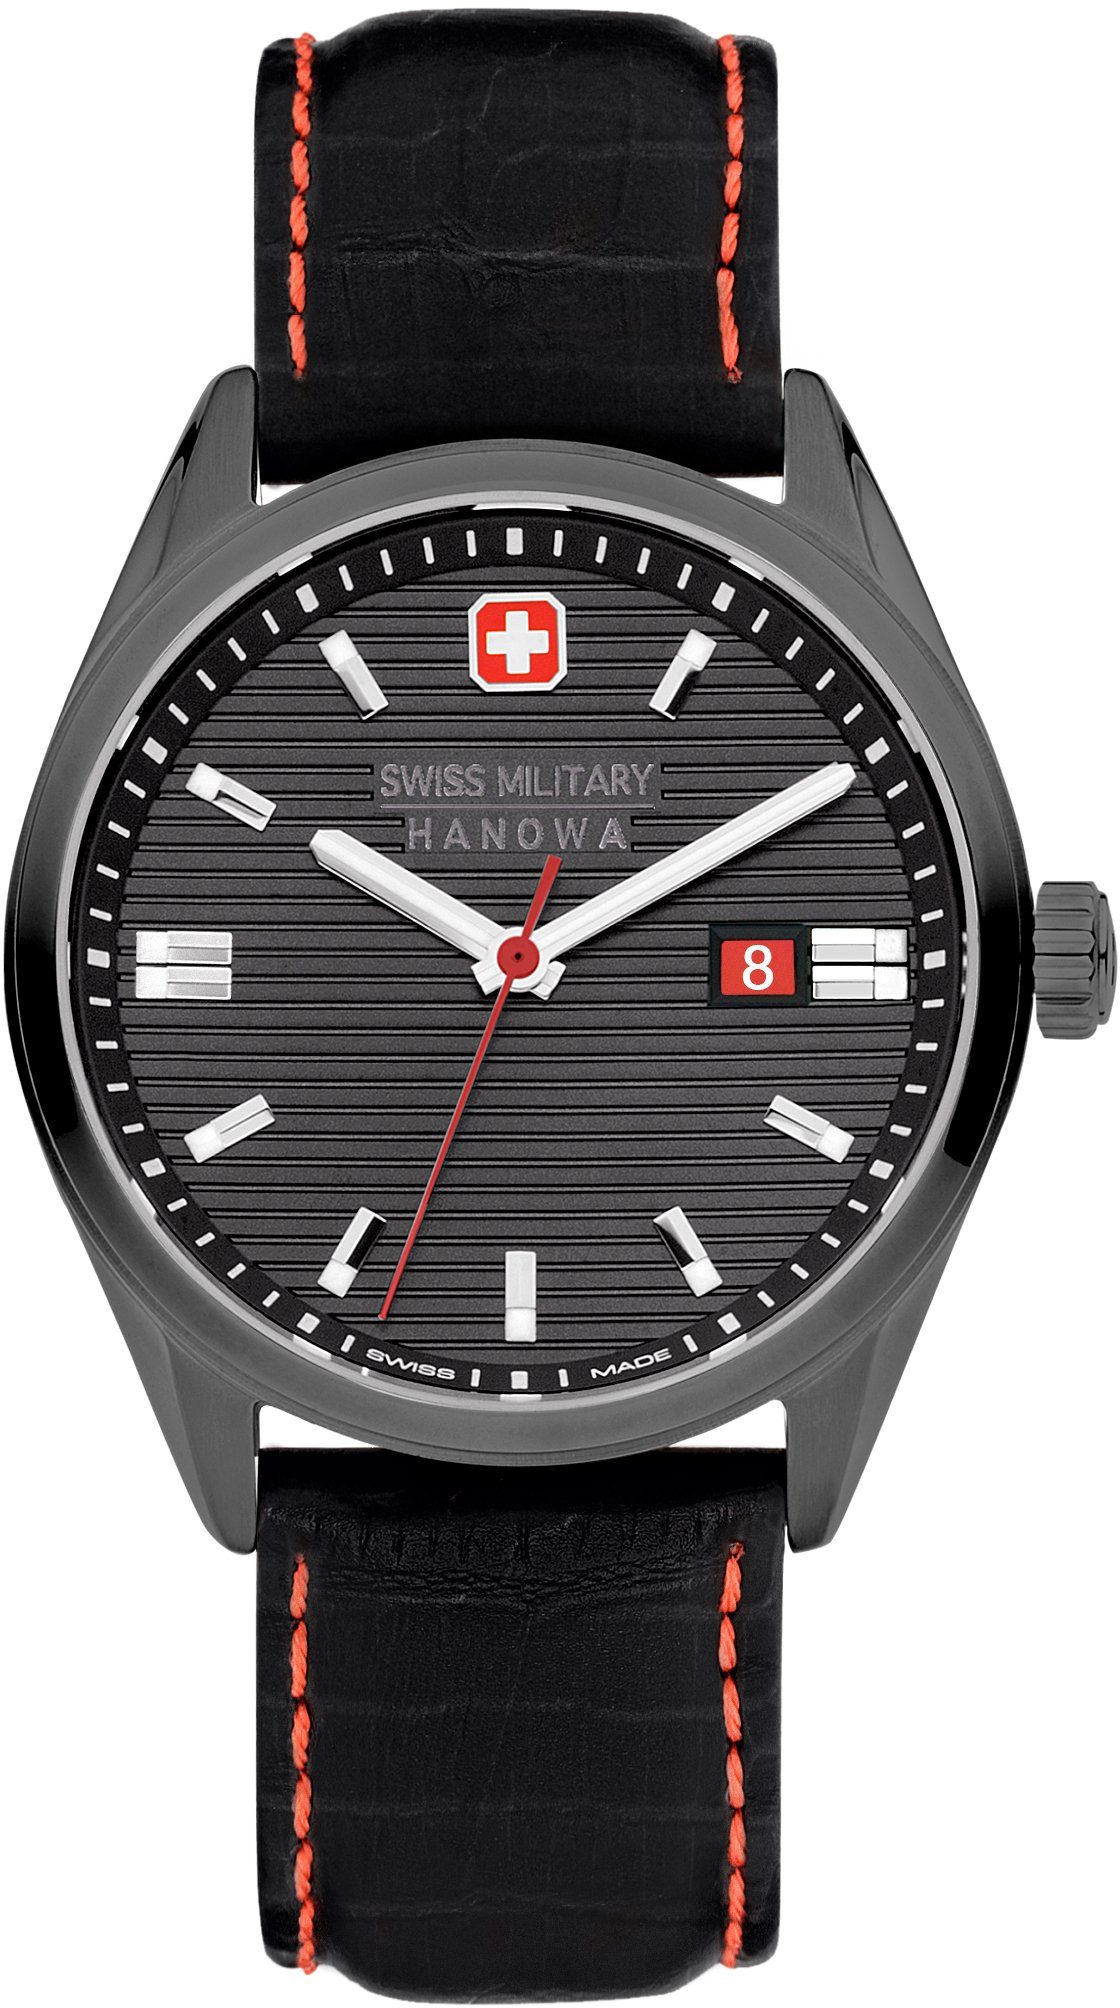 Military SMWGB2200140 Uhr Schweizer Grau ROADRUNNER, Hanowa Swiss